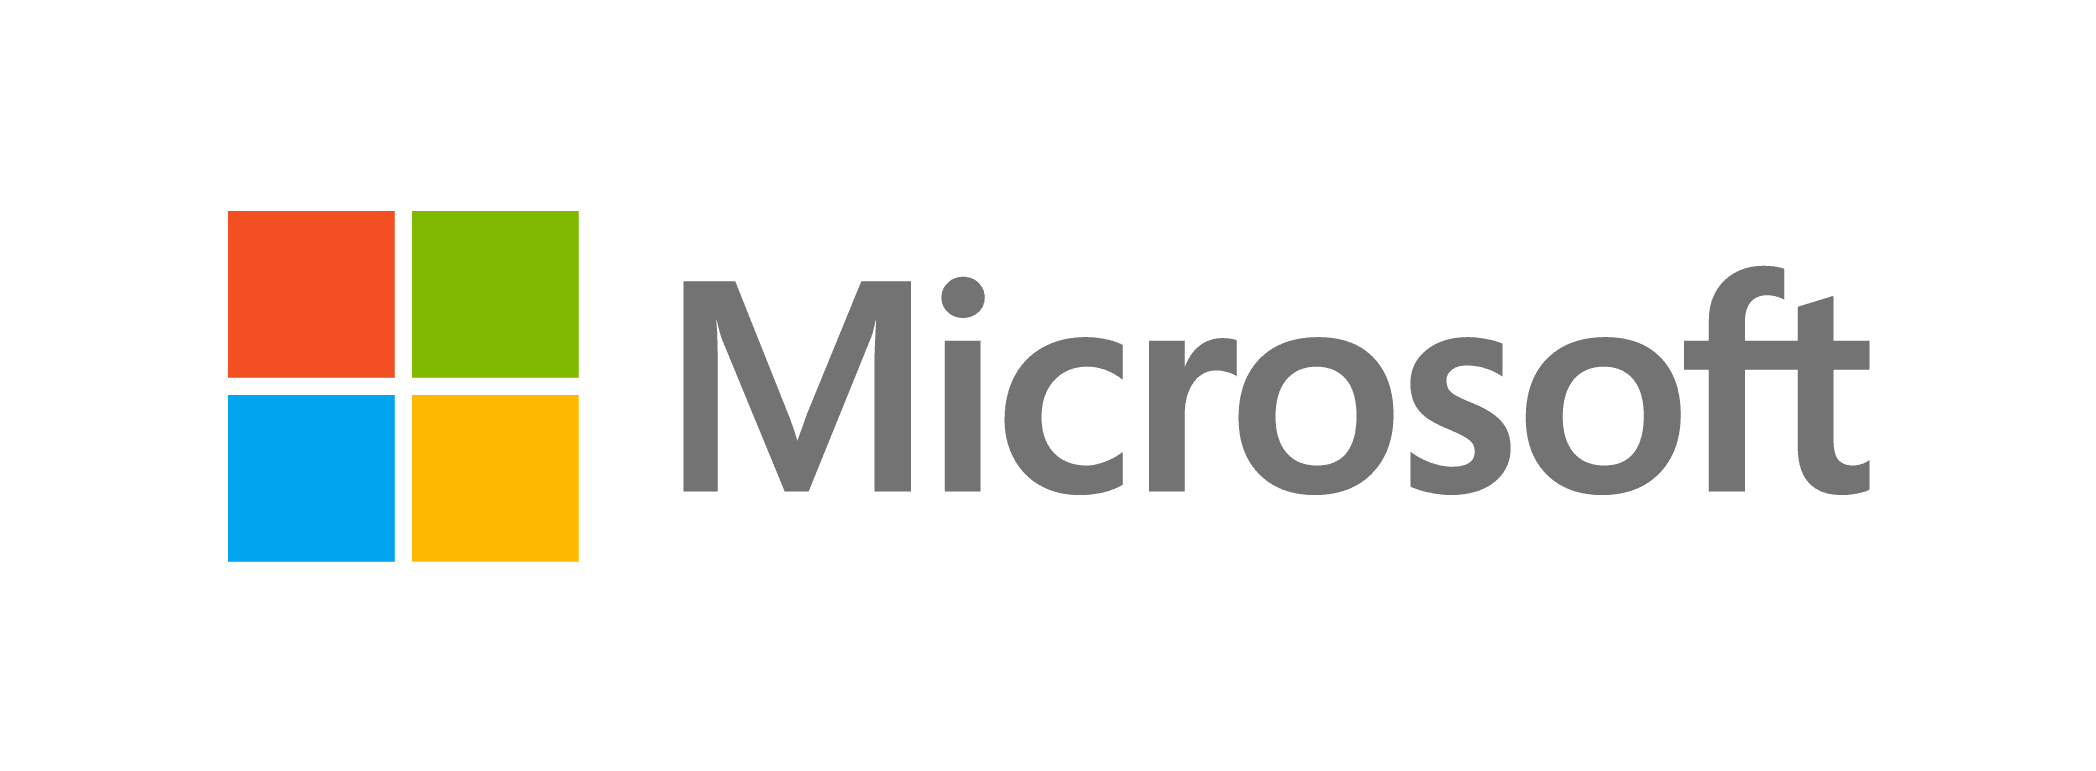 Microsoft Logo - Microsoft